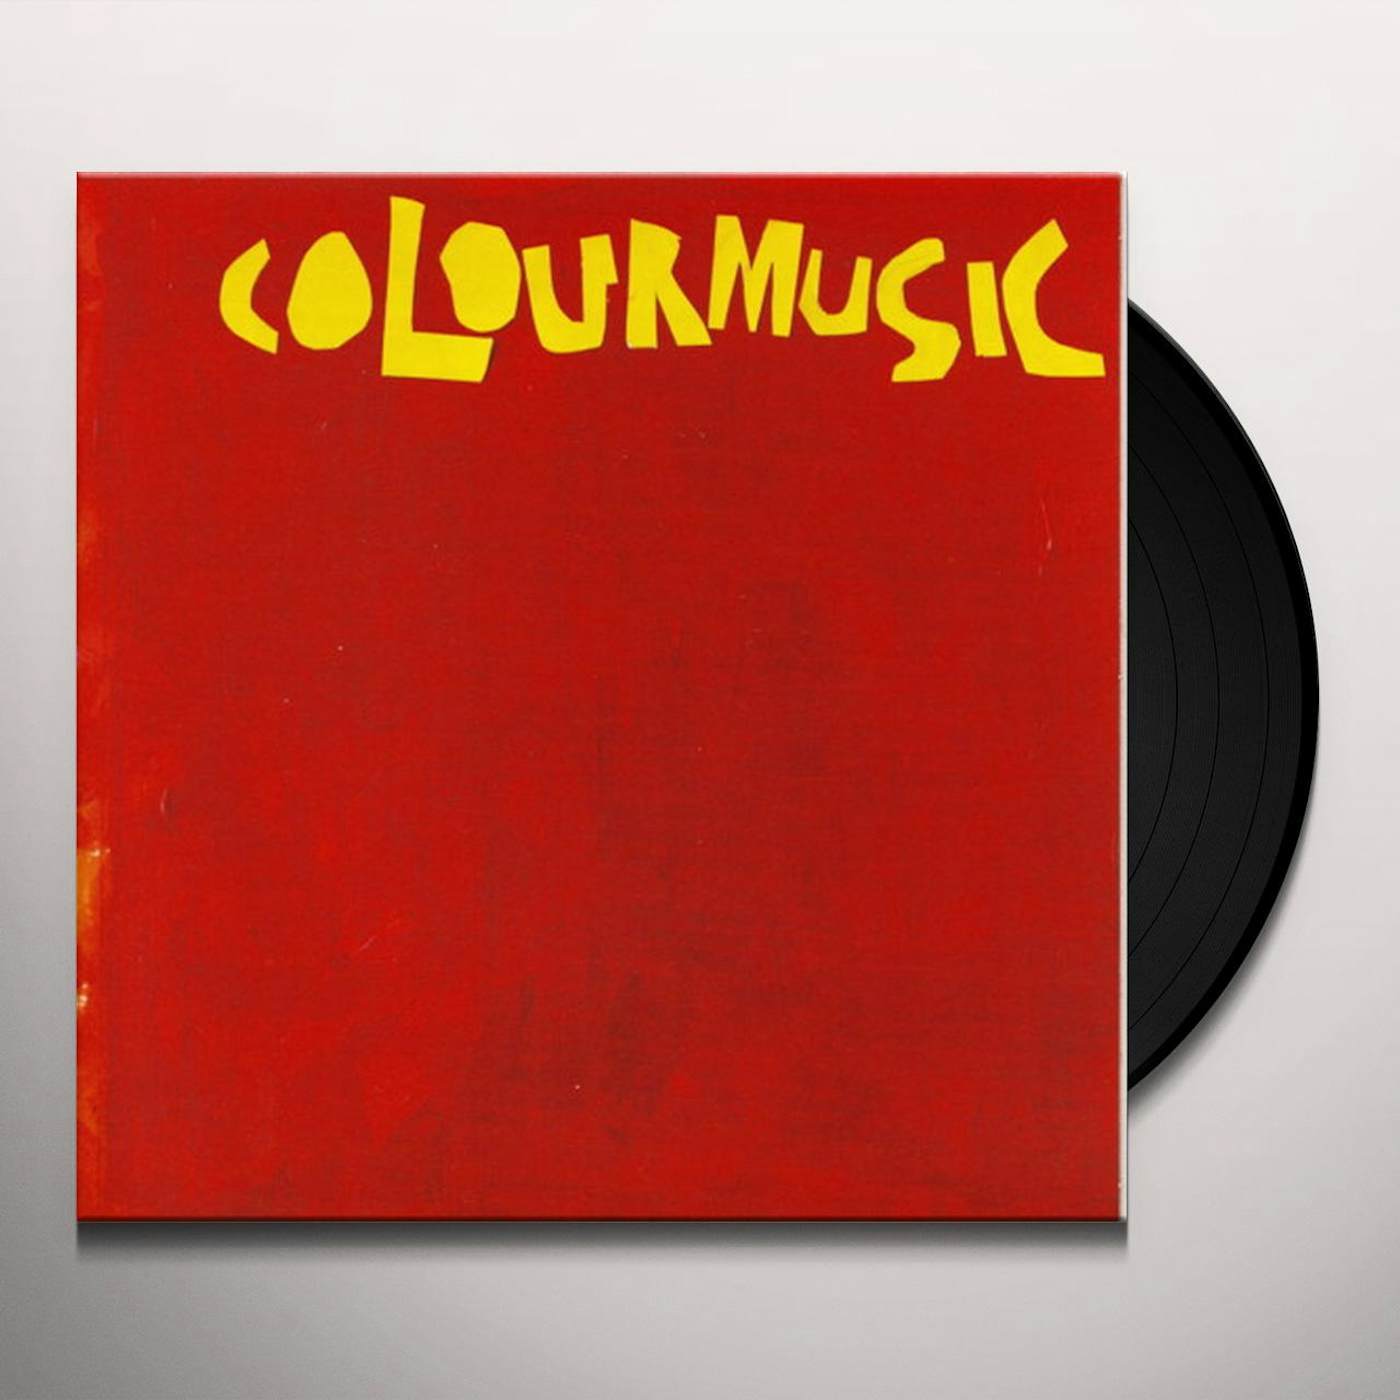 Colourmusic Yes! Vinyl Record